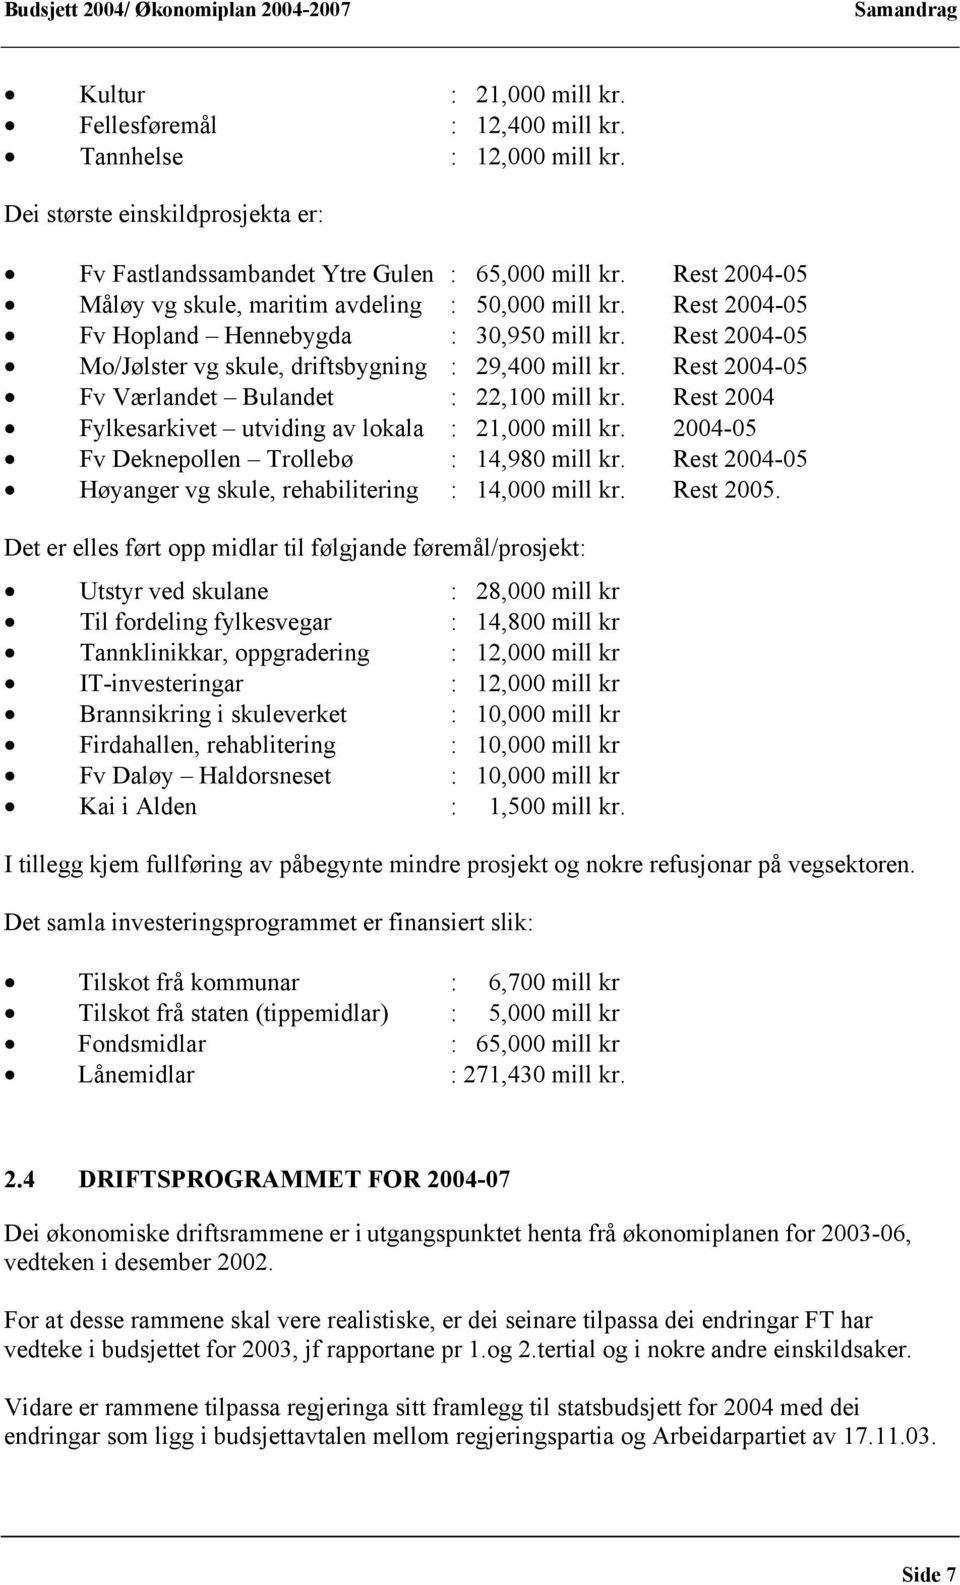 Rest 2004-05 Fv Hopland Hennebygda : 30,950 mill kr. Rest 2004-05 Mo/Jølster vg skule, driftsbygning : 29,400 mill kr. Rest 2004-05 Fv Værlandet Bulandet : 22,100 mill kr.